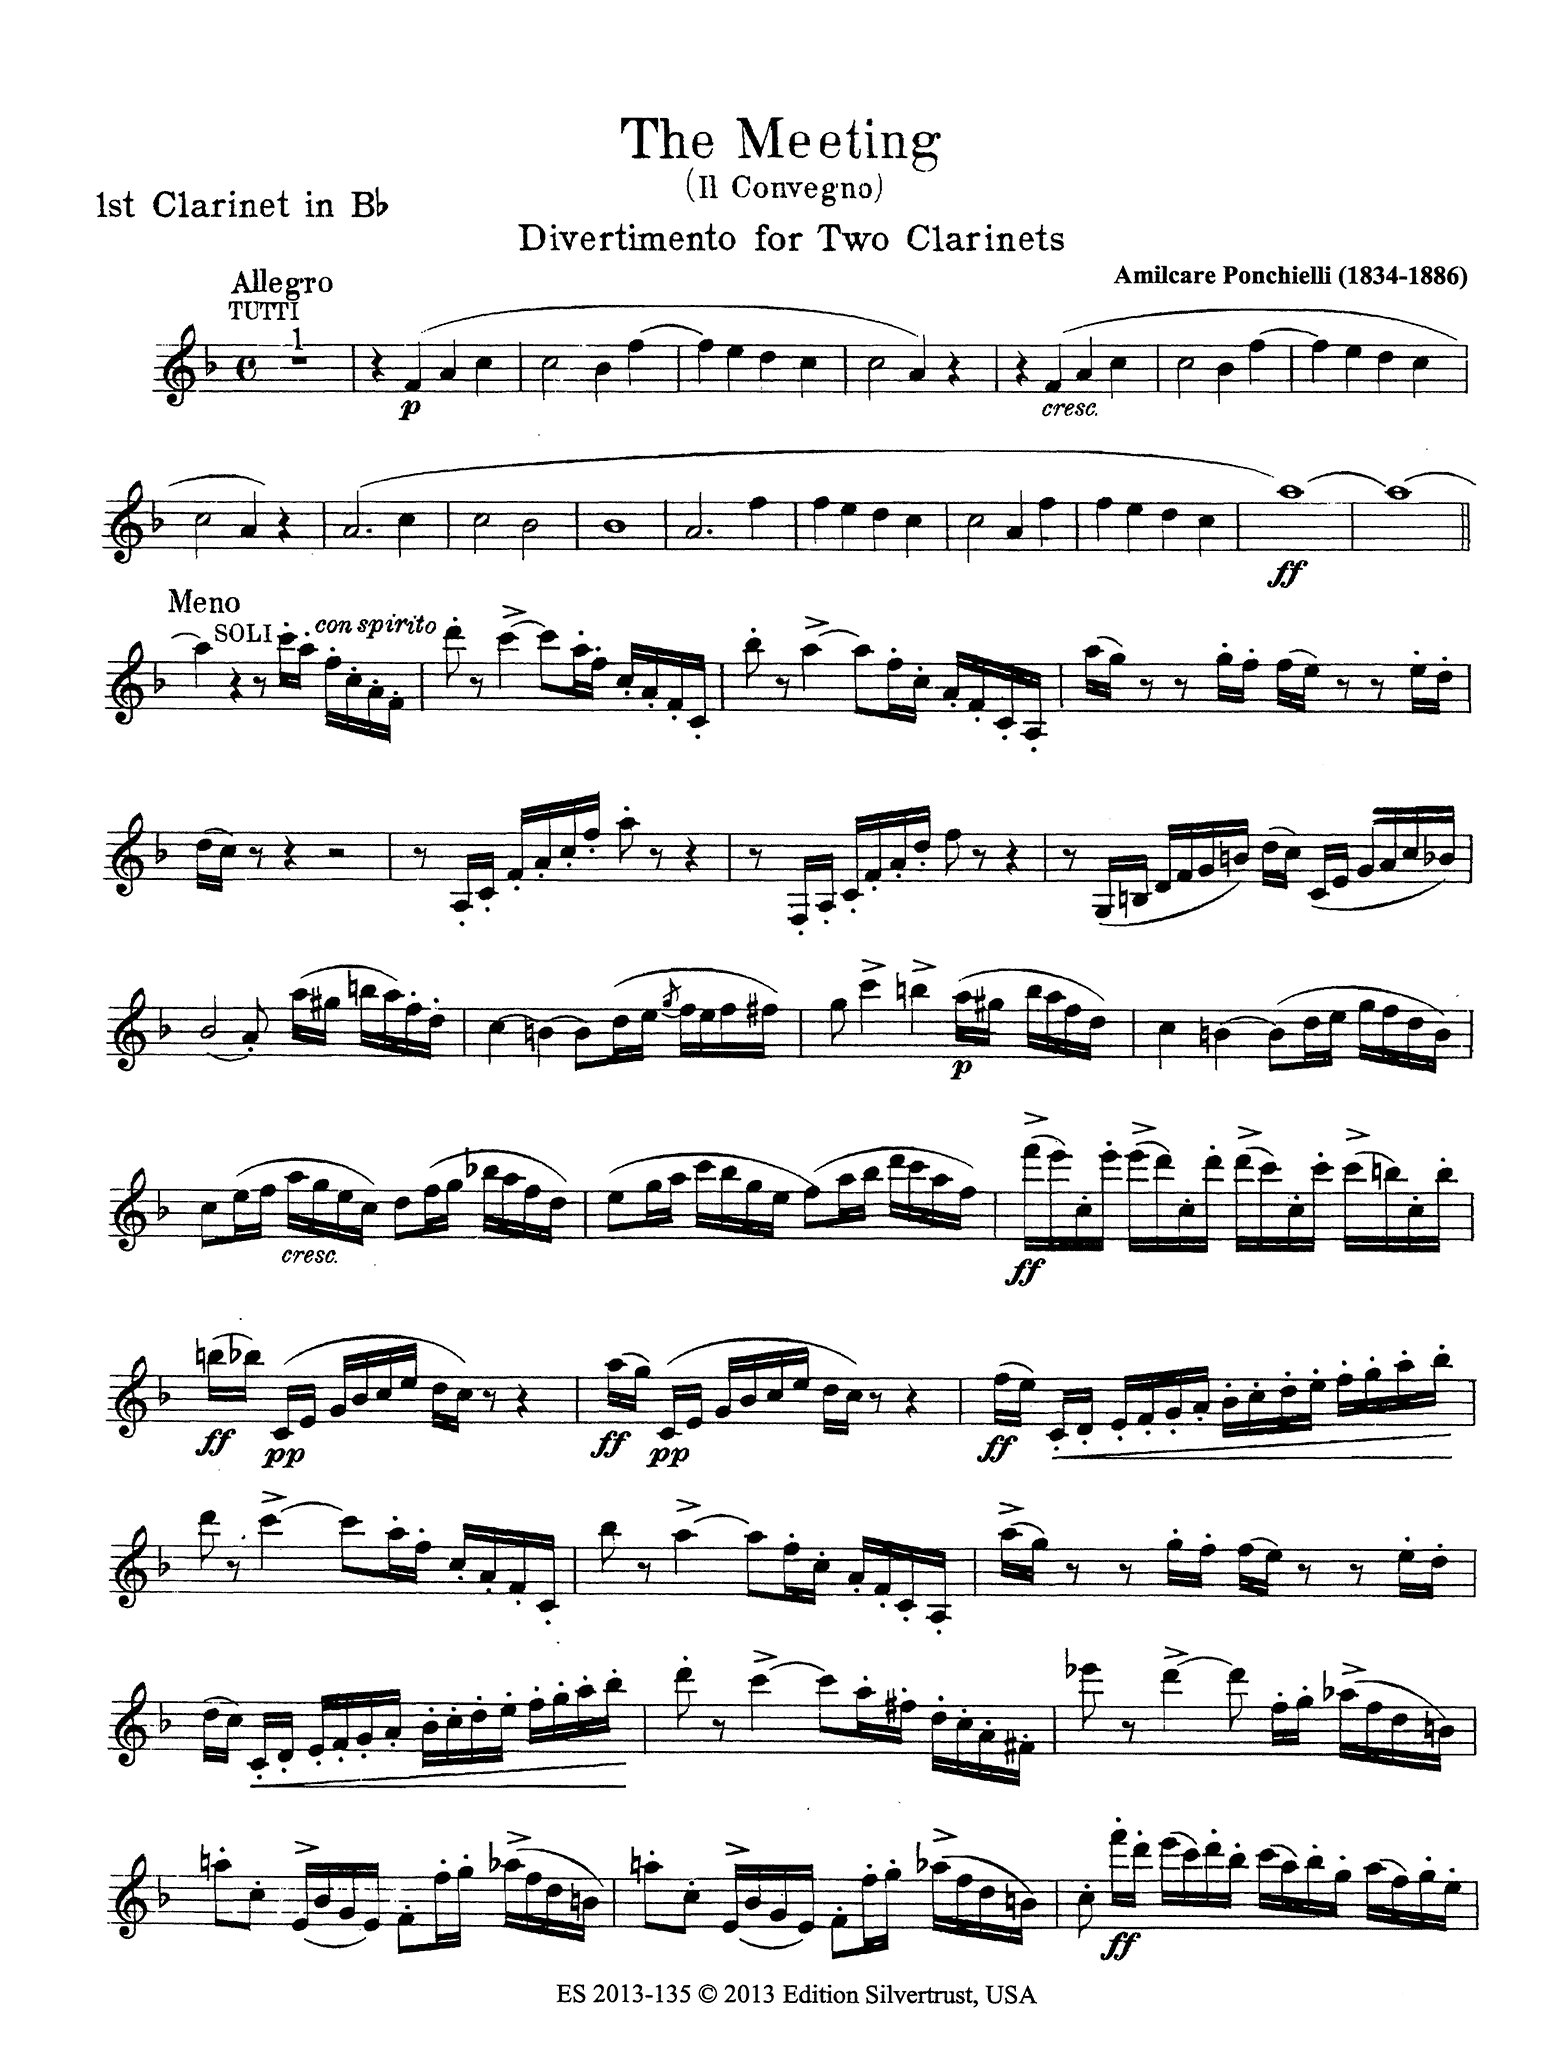 Ponchielli Il Convegno, Op. 76 first clarinet part